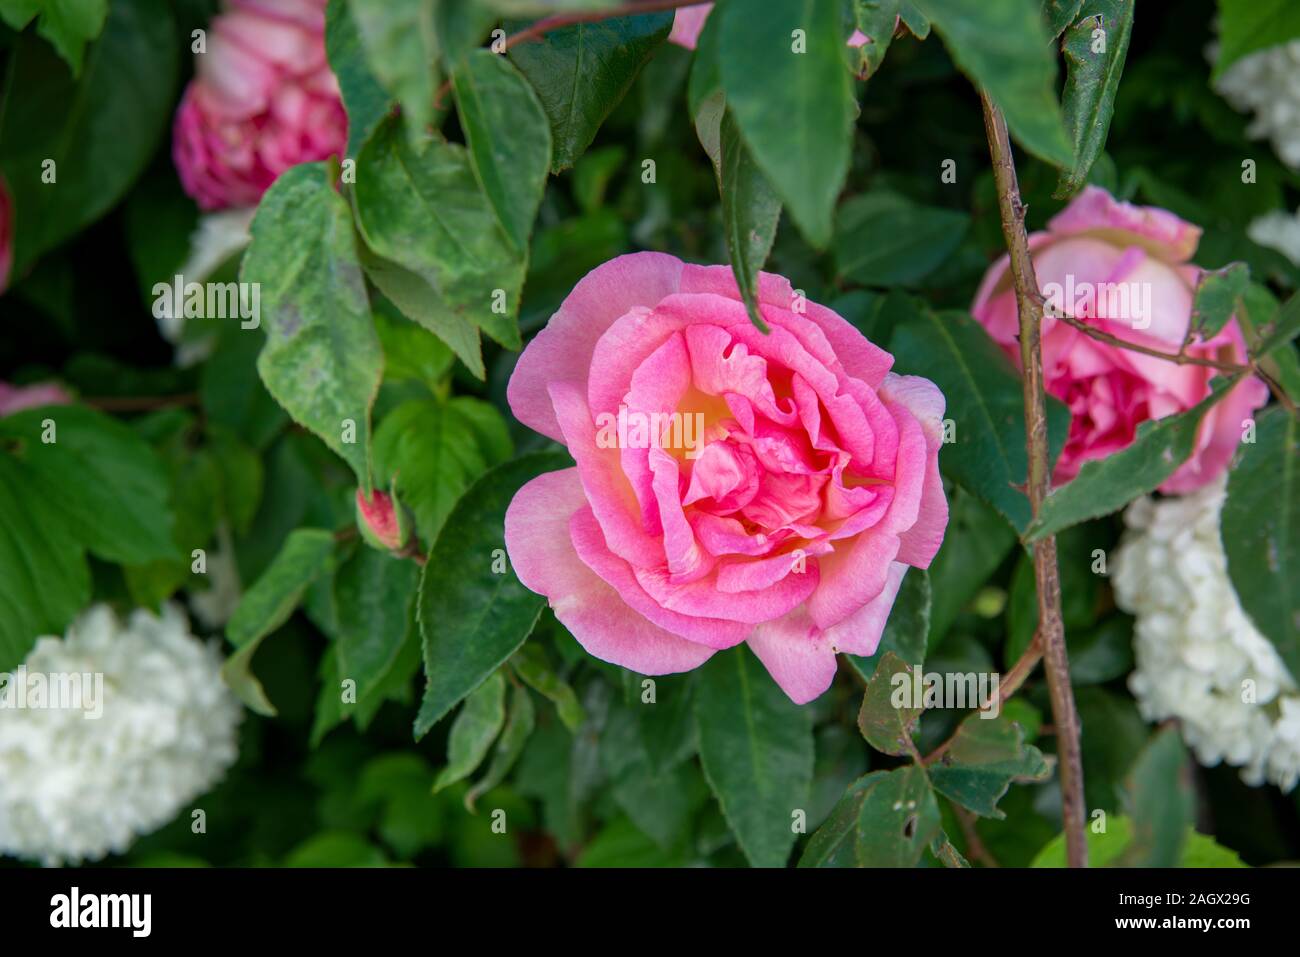 Nahaufnahme einer blühenden rosa Rose Foto Stock